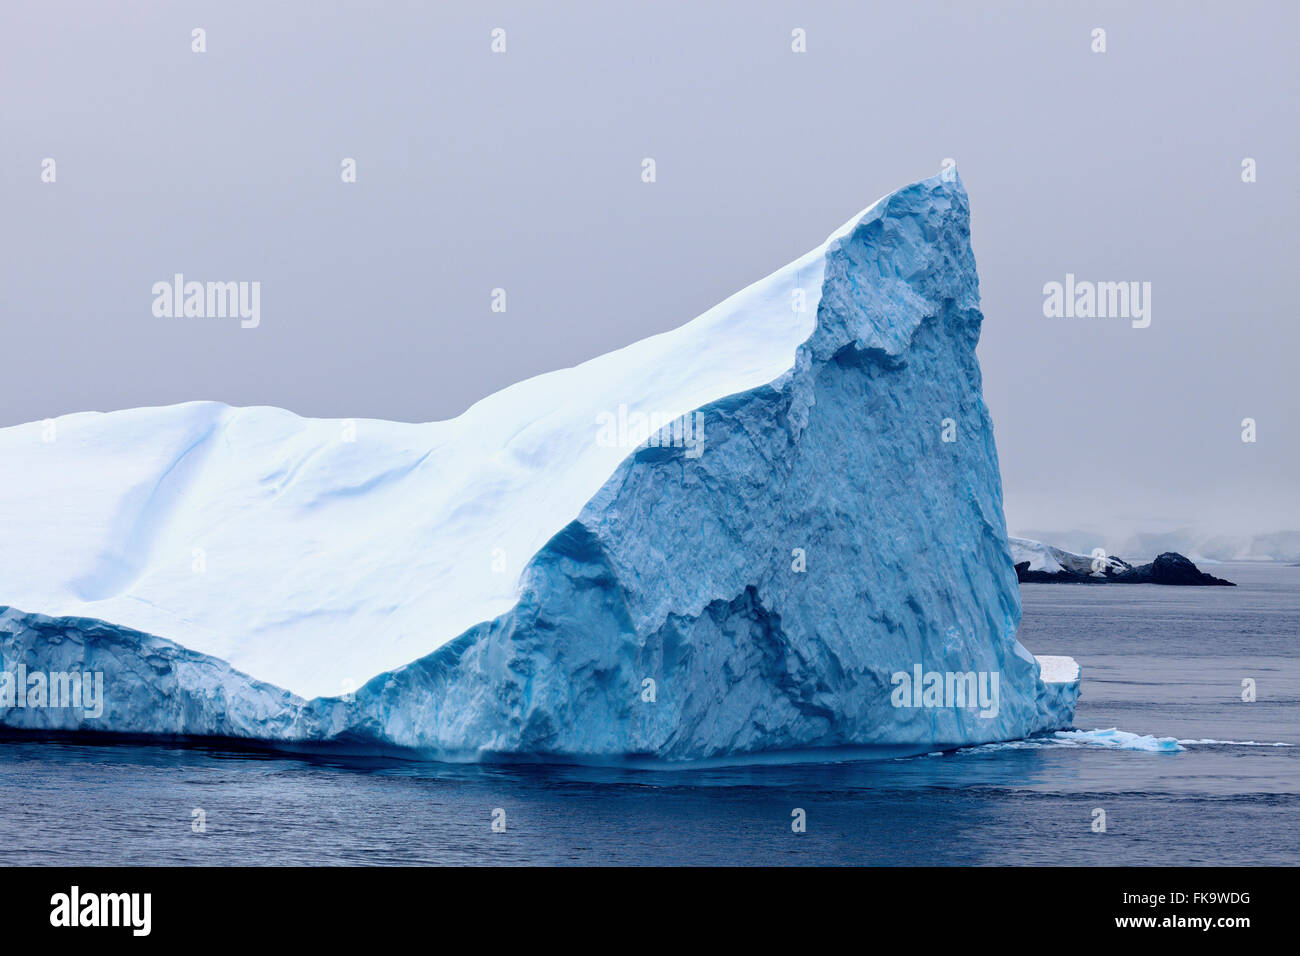 Antarctica landscape - iceberg floating in the sea Stock Photo